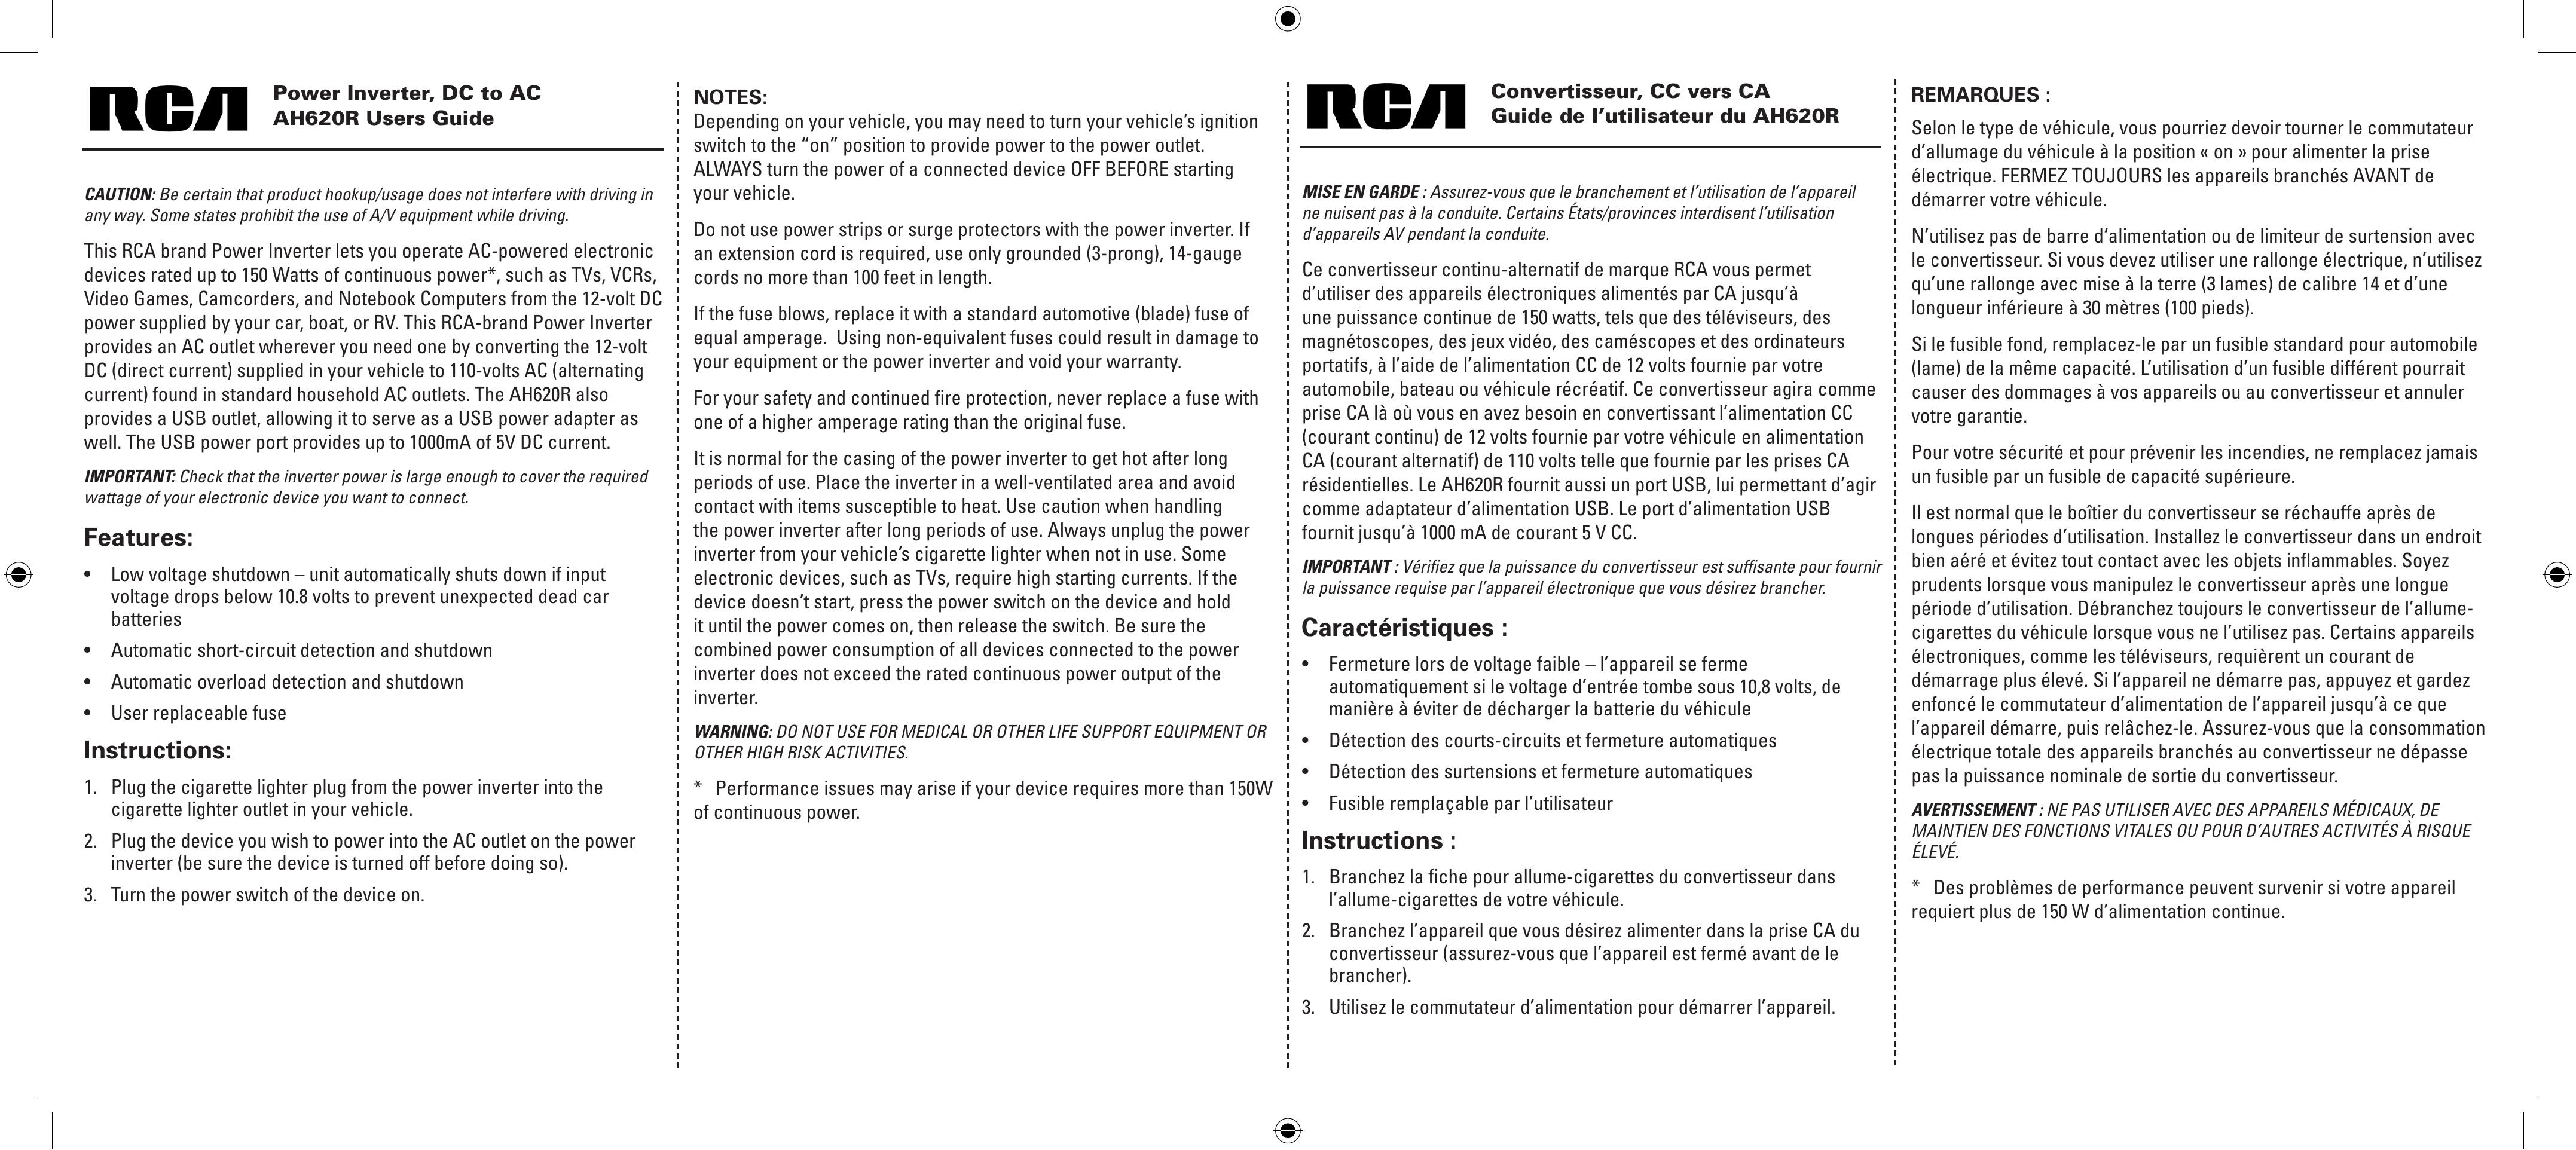 RCA AH620R Marine Battery User Manual